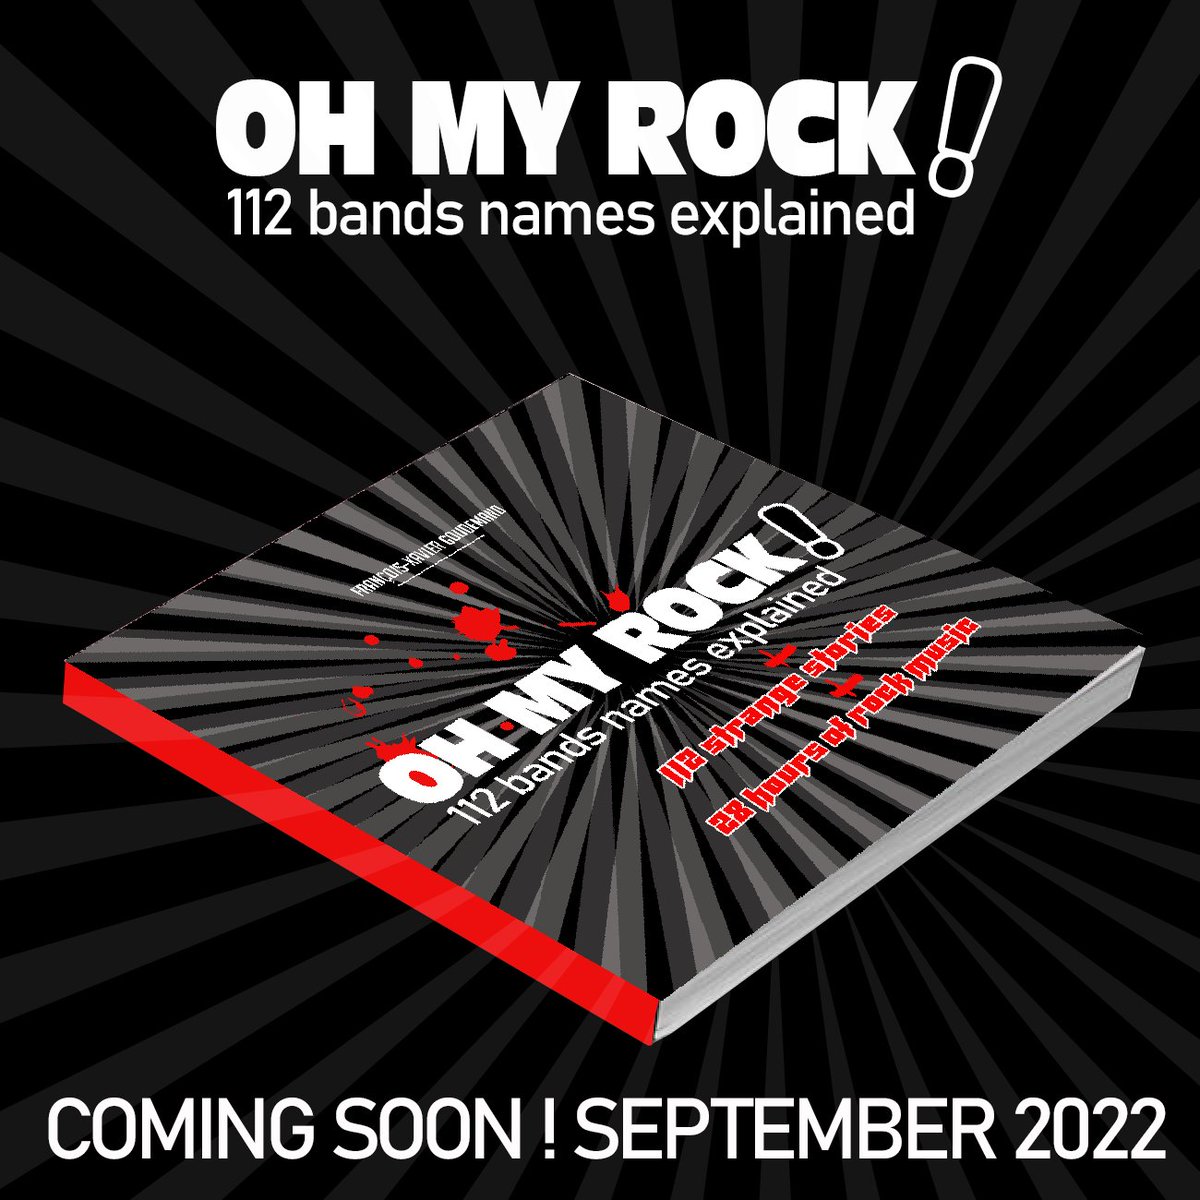 🚨COMING SOON - SEPTEMBER 2022.
New book #OhMyRock English version 🇬🇧🇺🇸 ⚡️🤘
#NouveauLivre #Newbook #RockMusicBook #MetalMusicBook #Amazon #Hardrock #NamesExplained